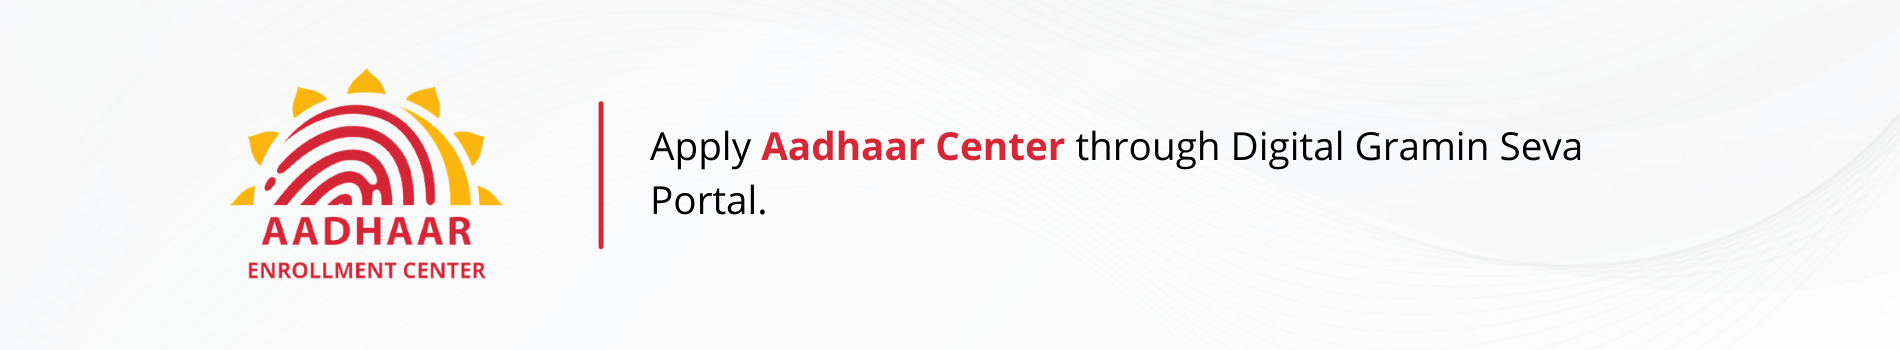 Aadhar Center Apply